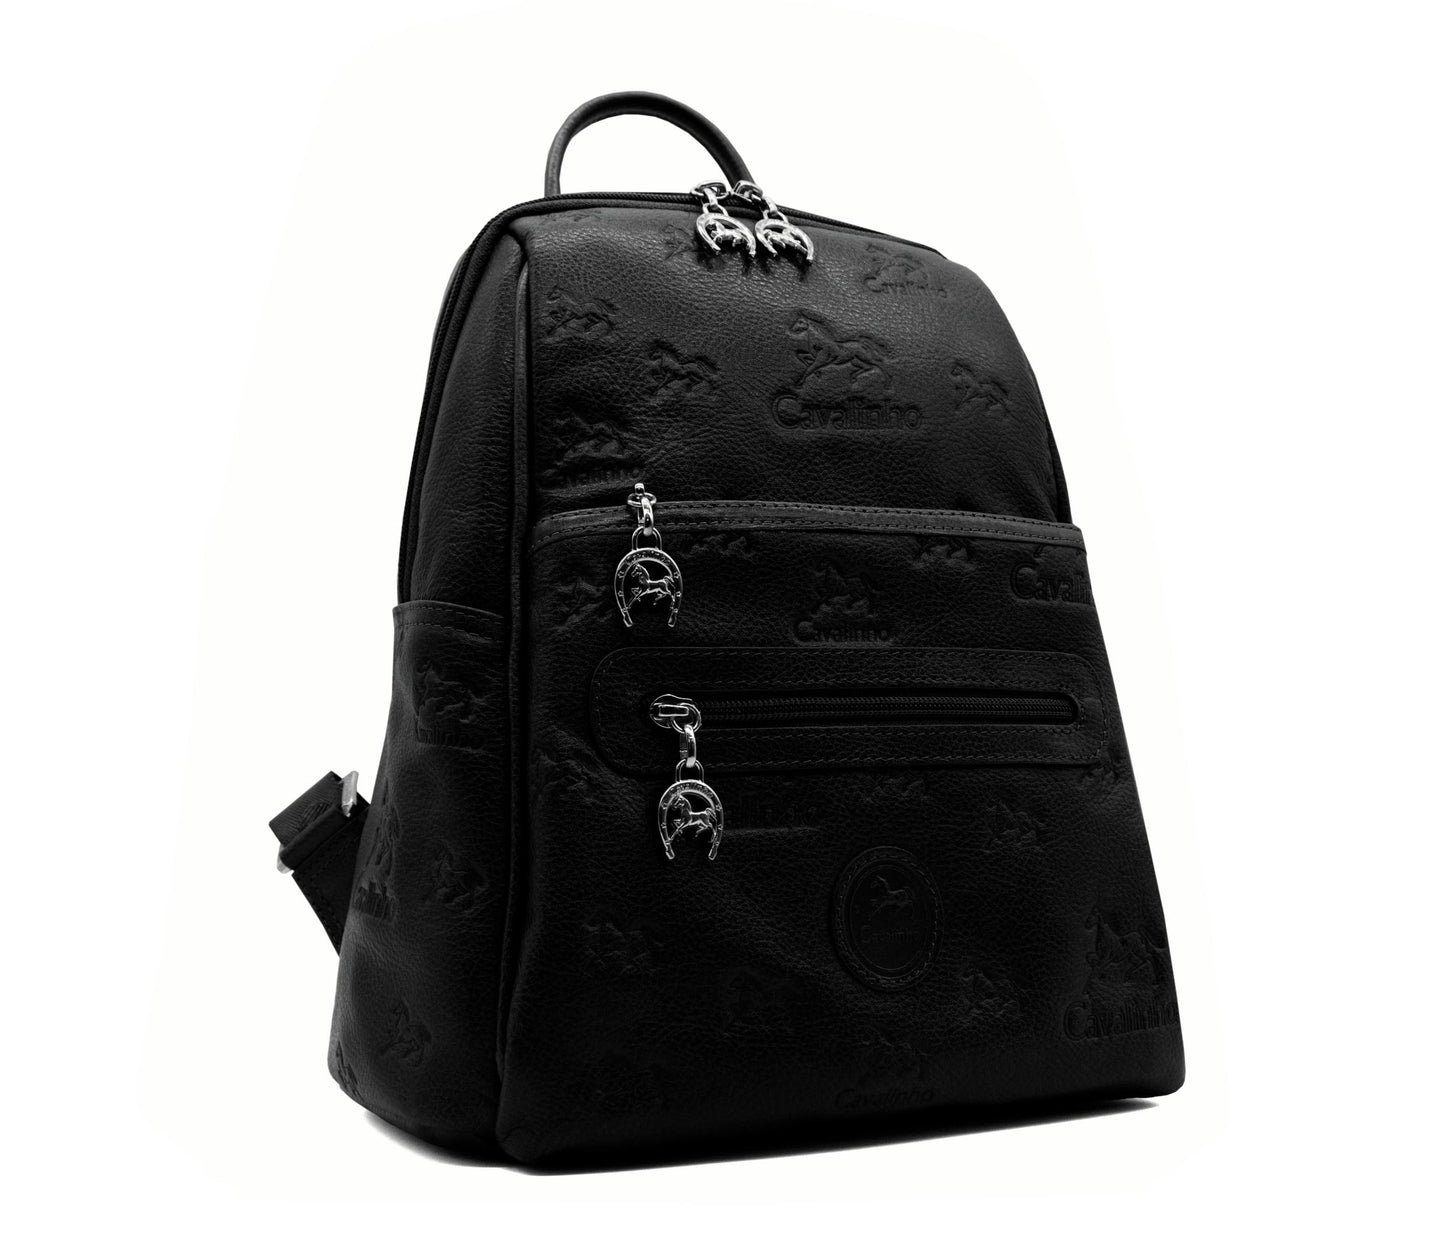 Cavalinho Cavalo Lusitano Leather Backpack - Black - 18090412.01_2